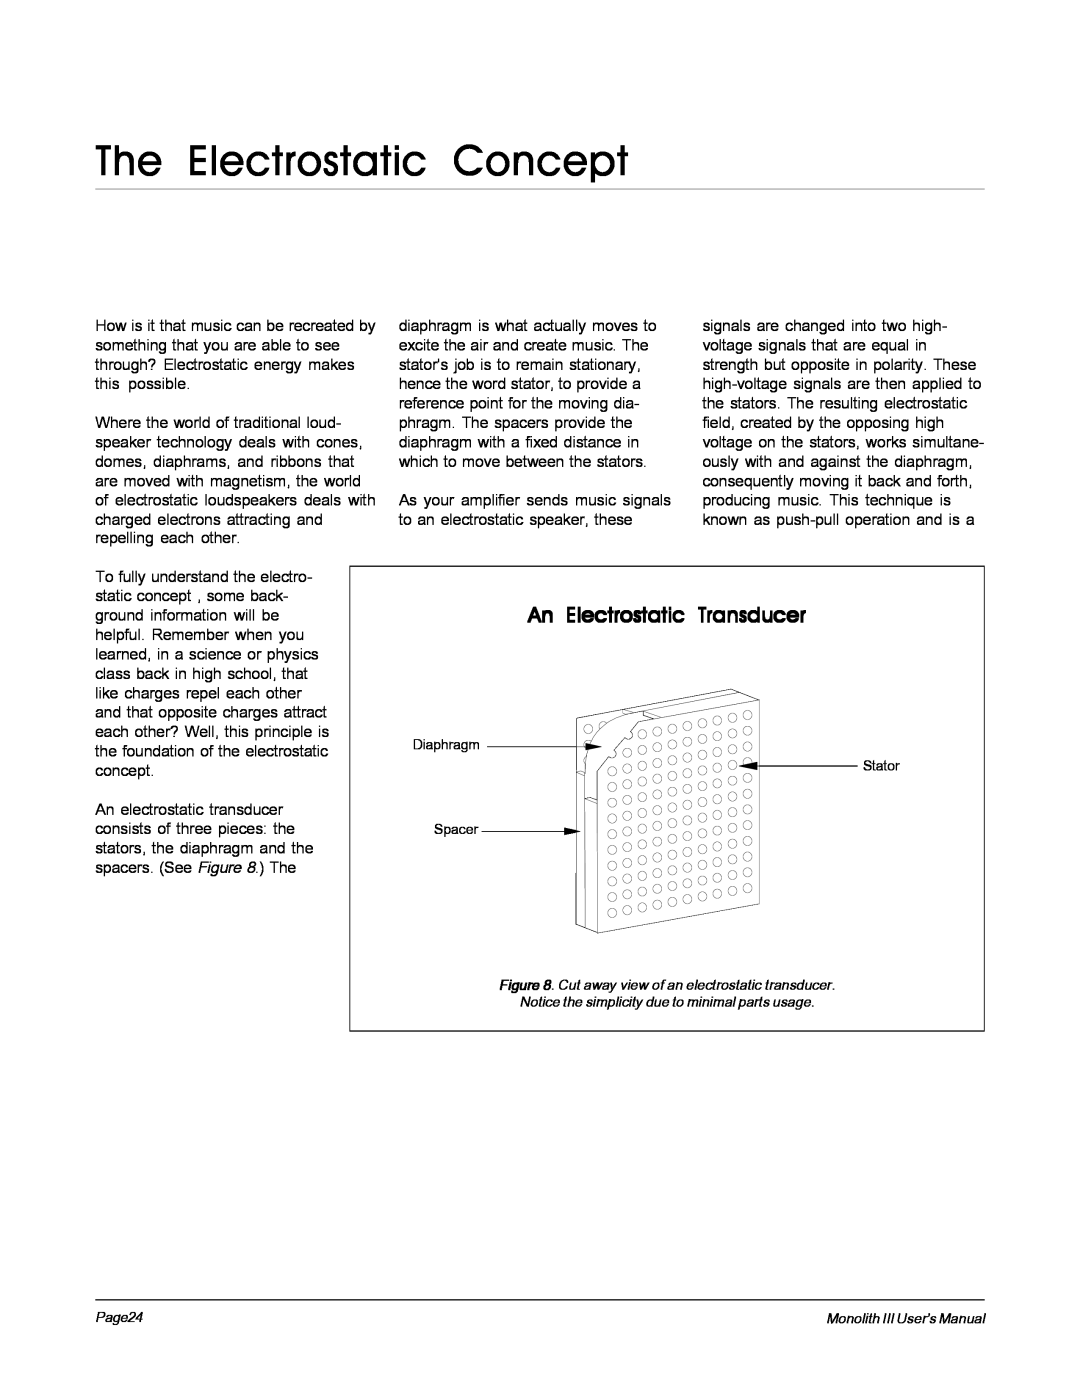 MartinLogan Monolith III user manual The Electrostatic Concept, An Electrostatic Transducer 